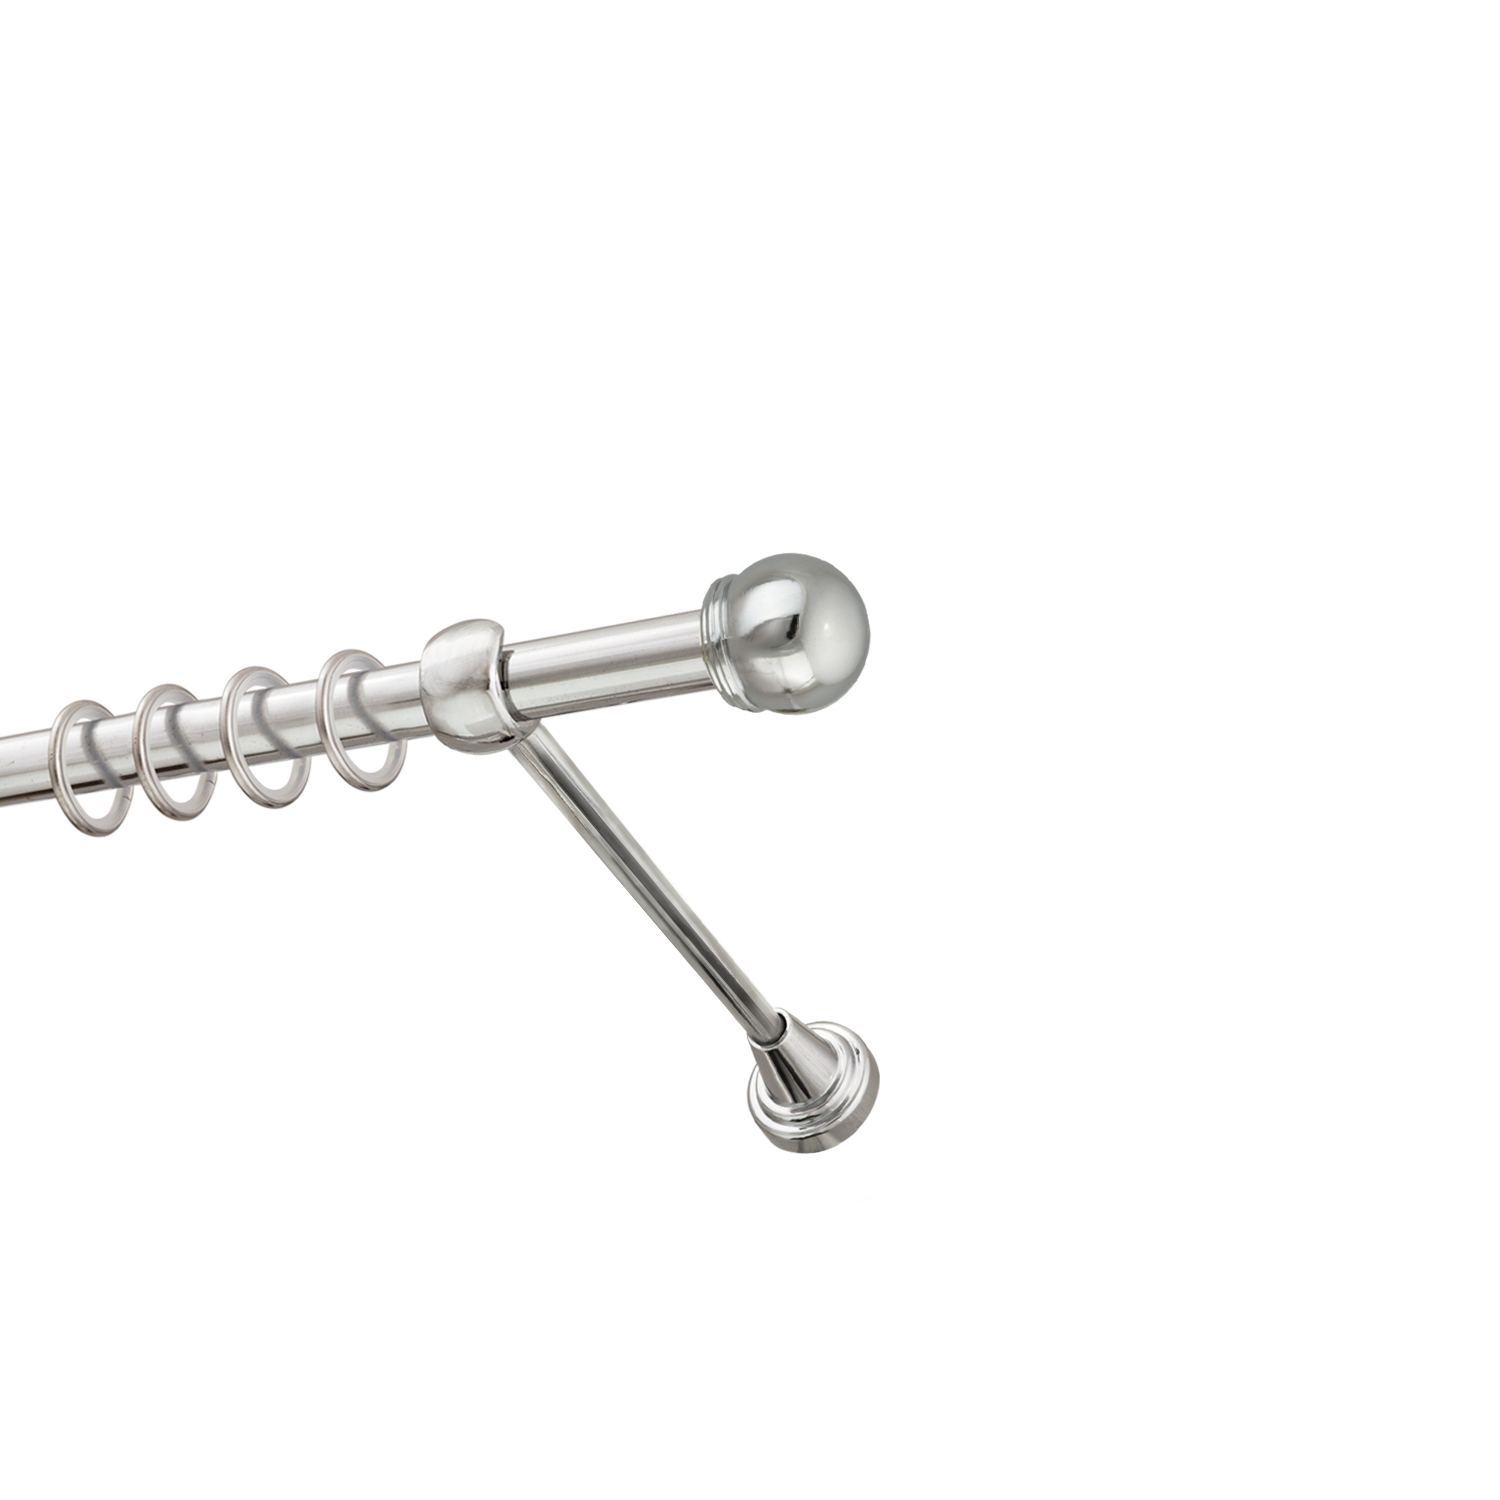 Металлический карниз для штор Вива, однорядный 16 мм, серебро, гладкая штанга, длина 180 см - фото Wikidecor.ru